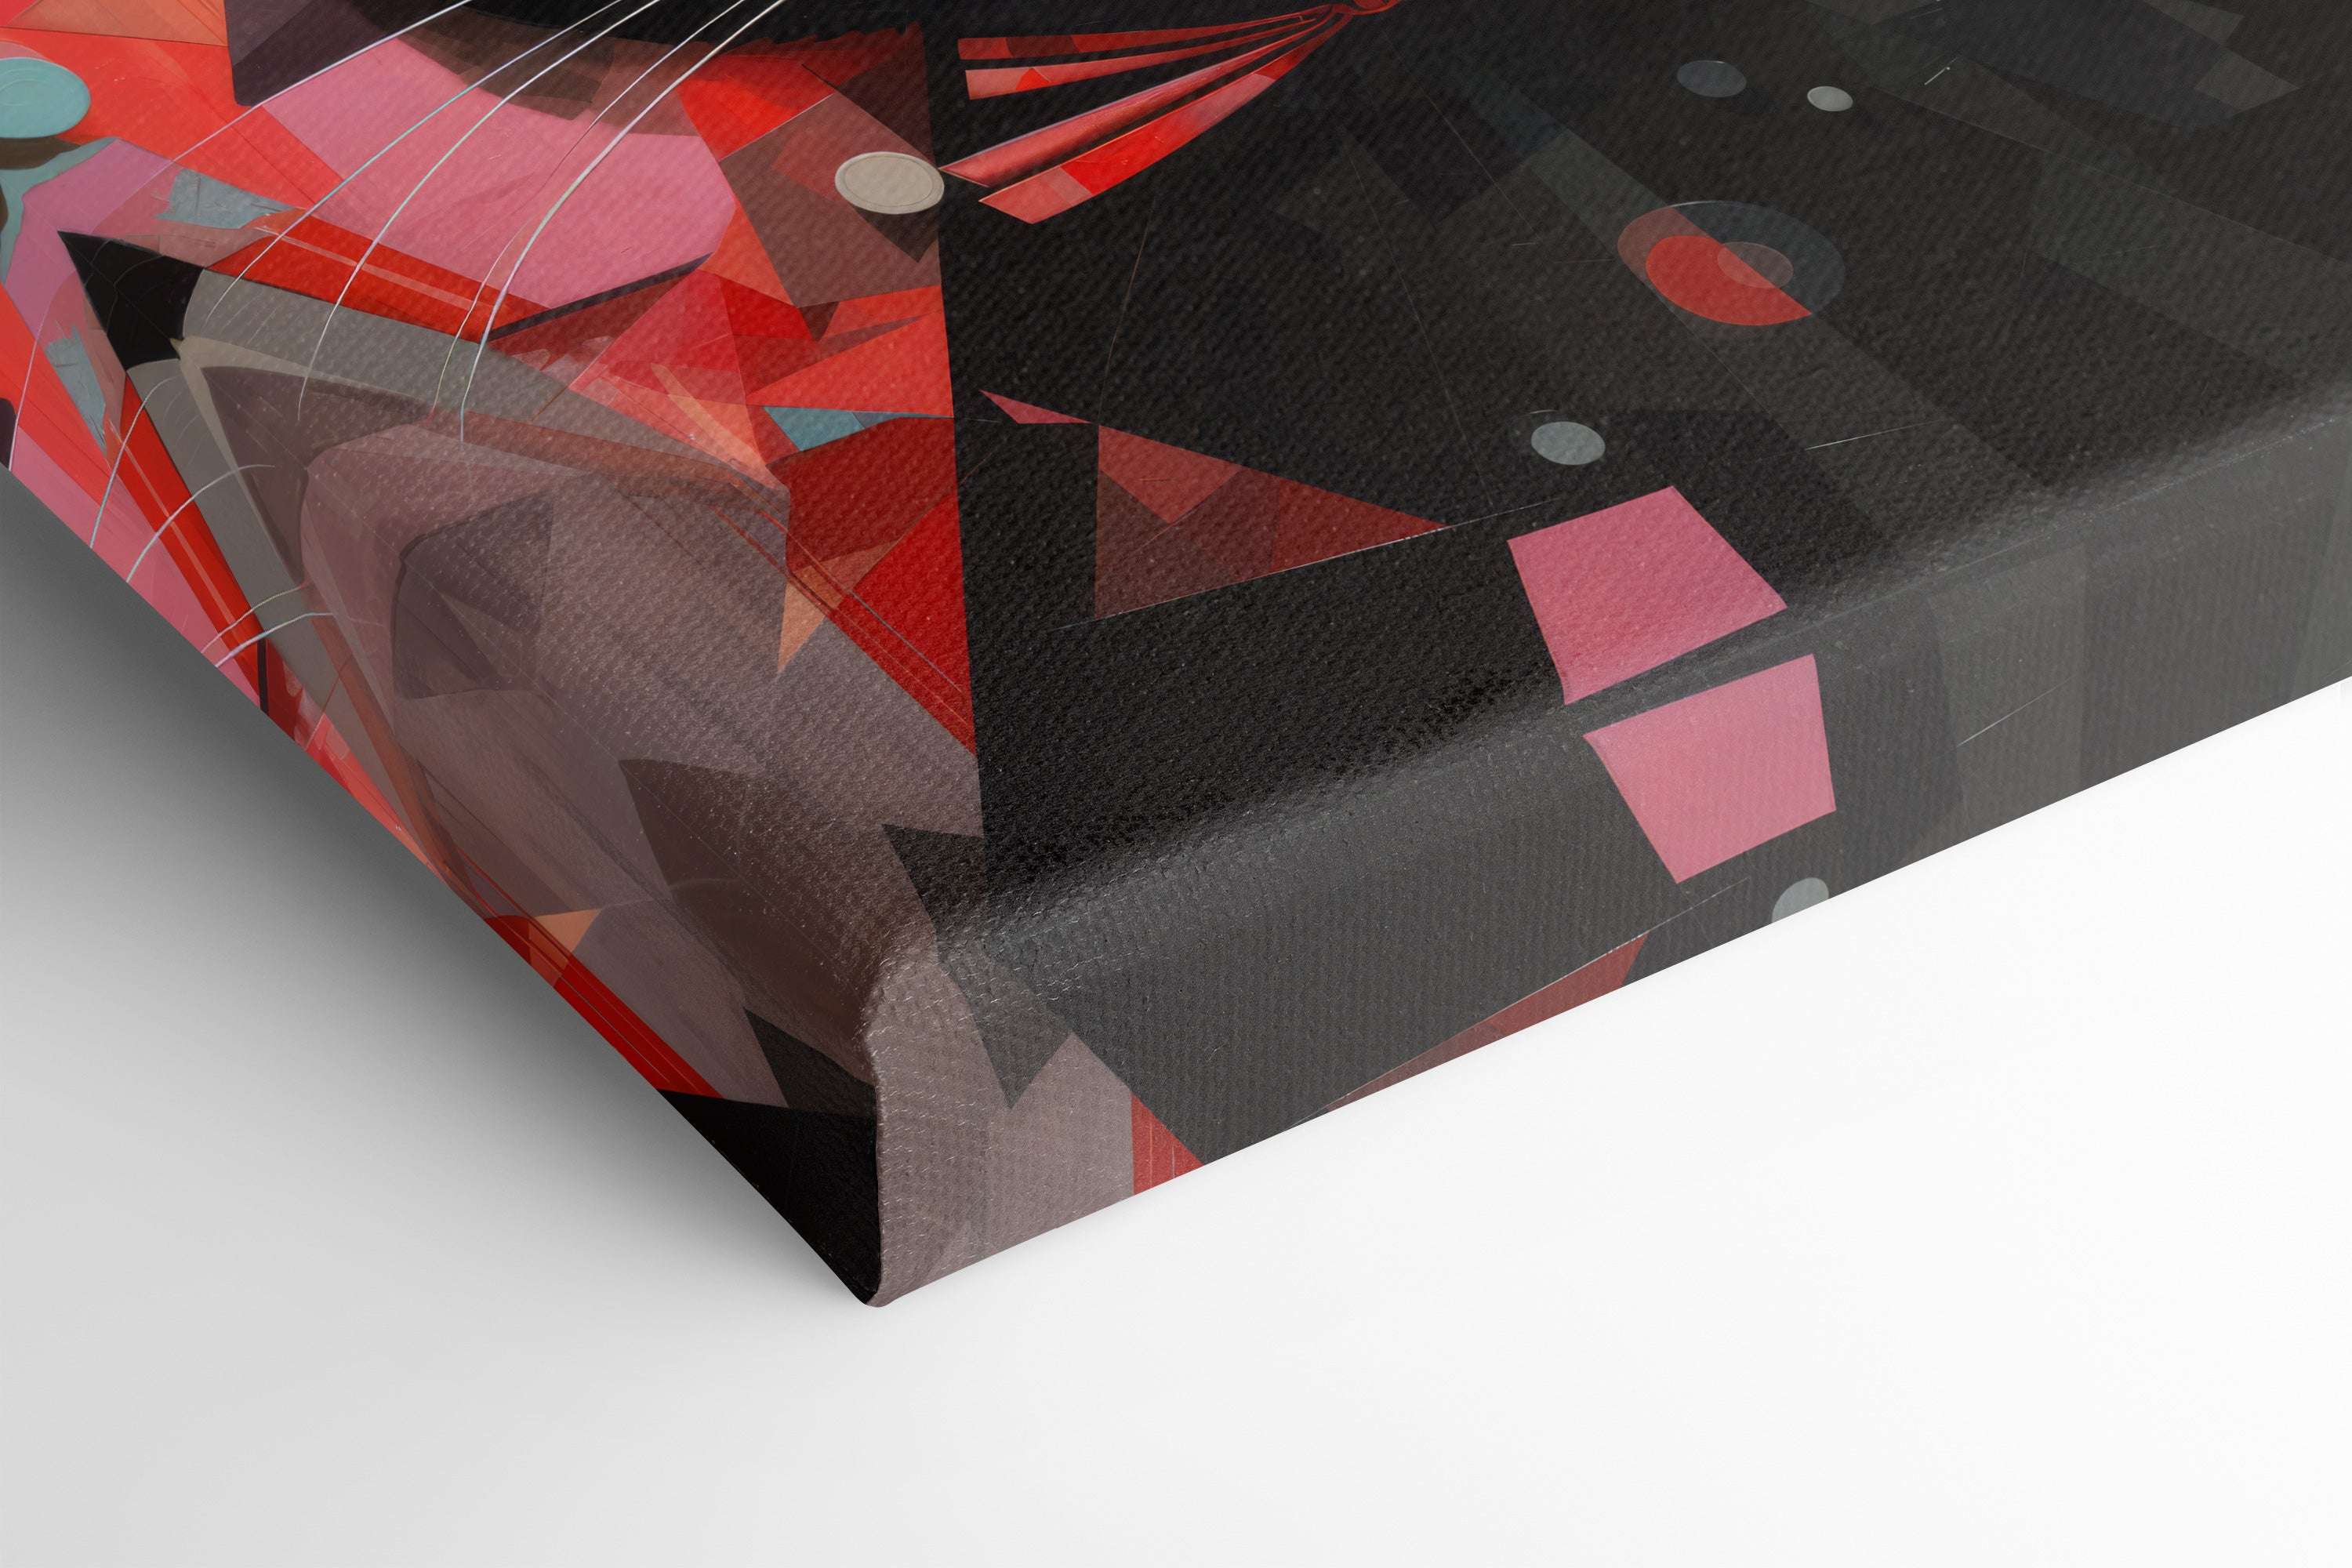 Kaleidoscopic Abstract Black Cat - Canvas Print - Artoholica Ready to Hang Canvas Print